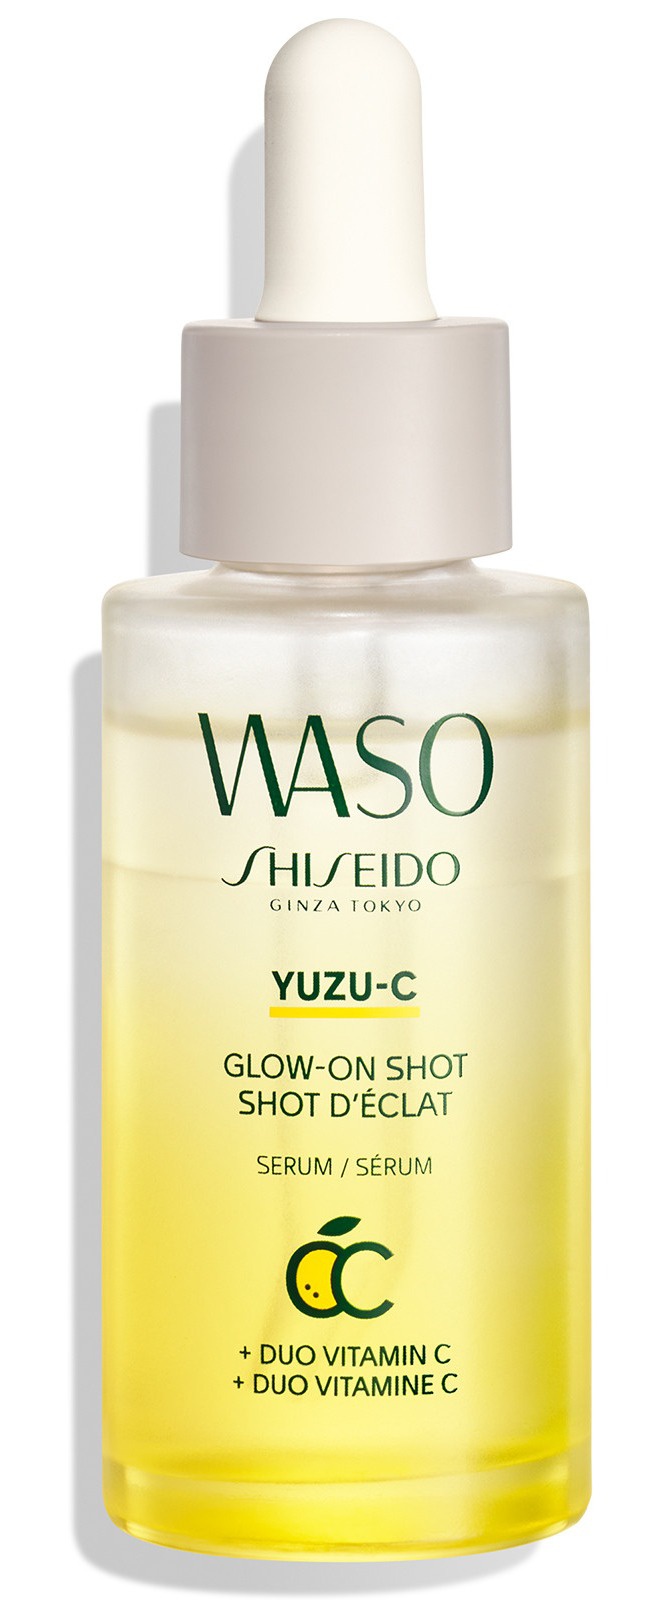 Shiseido Waso Yuzu-c Glow-on Shot